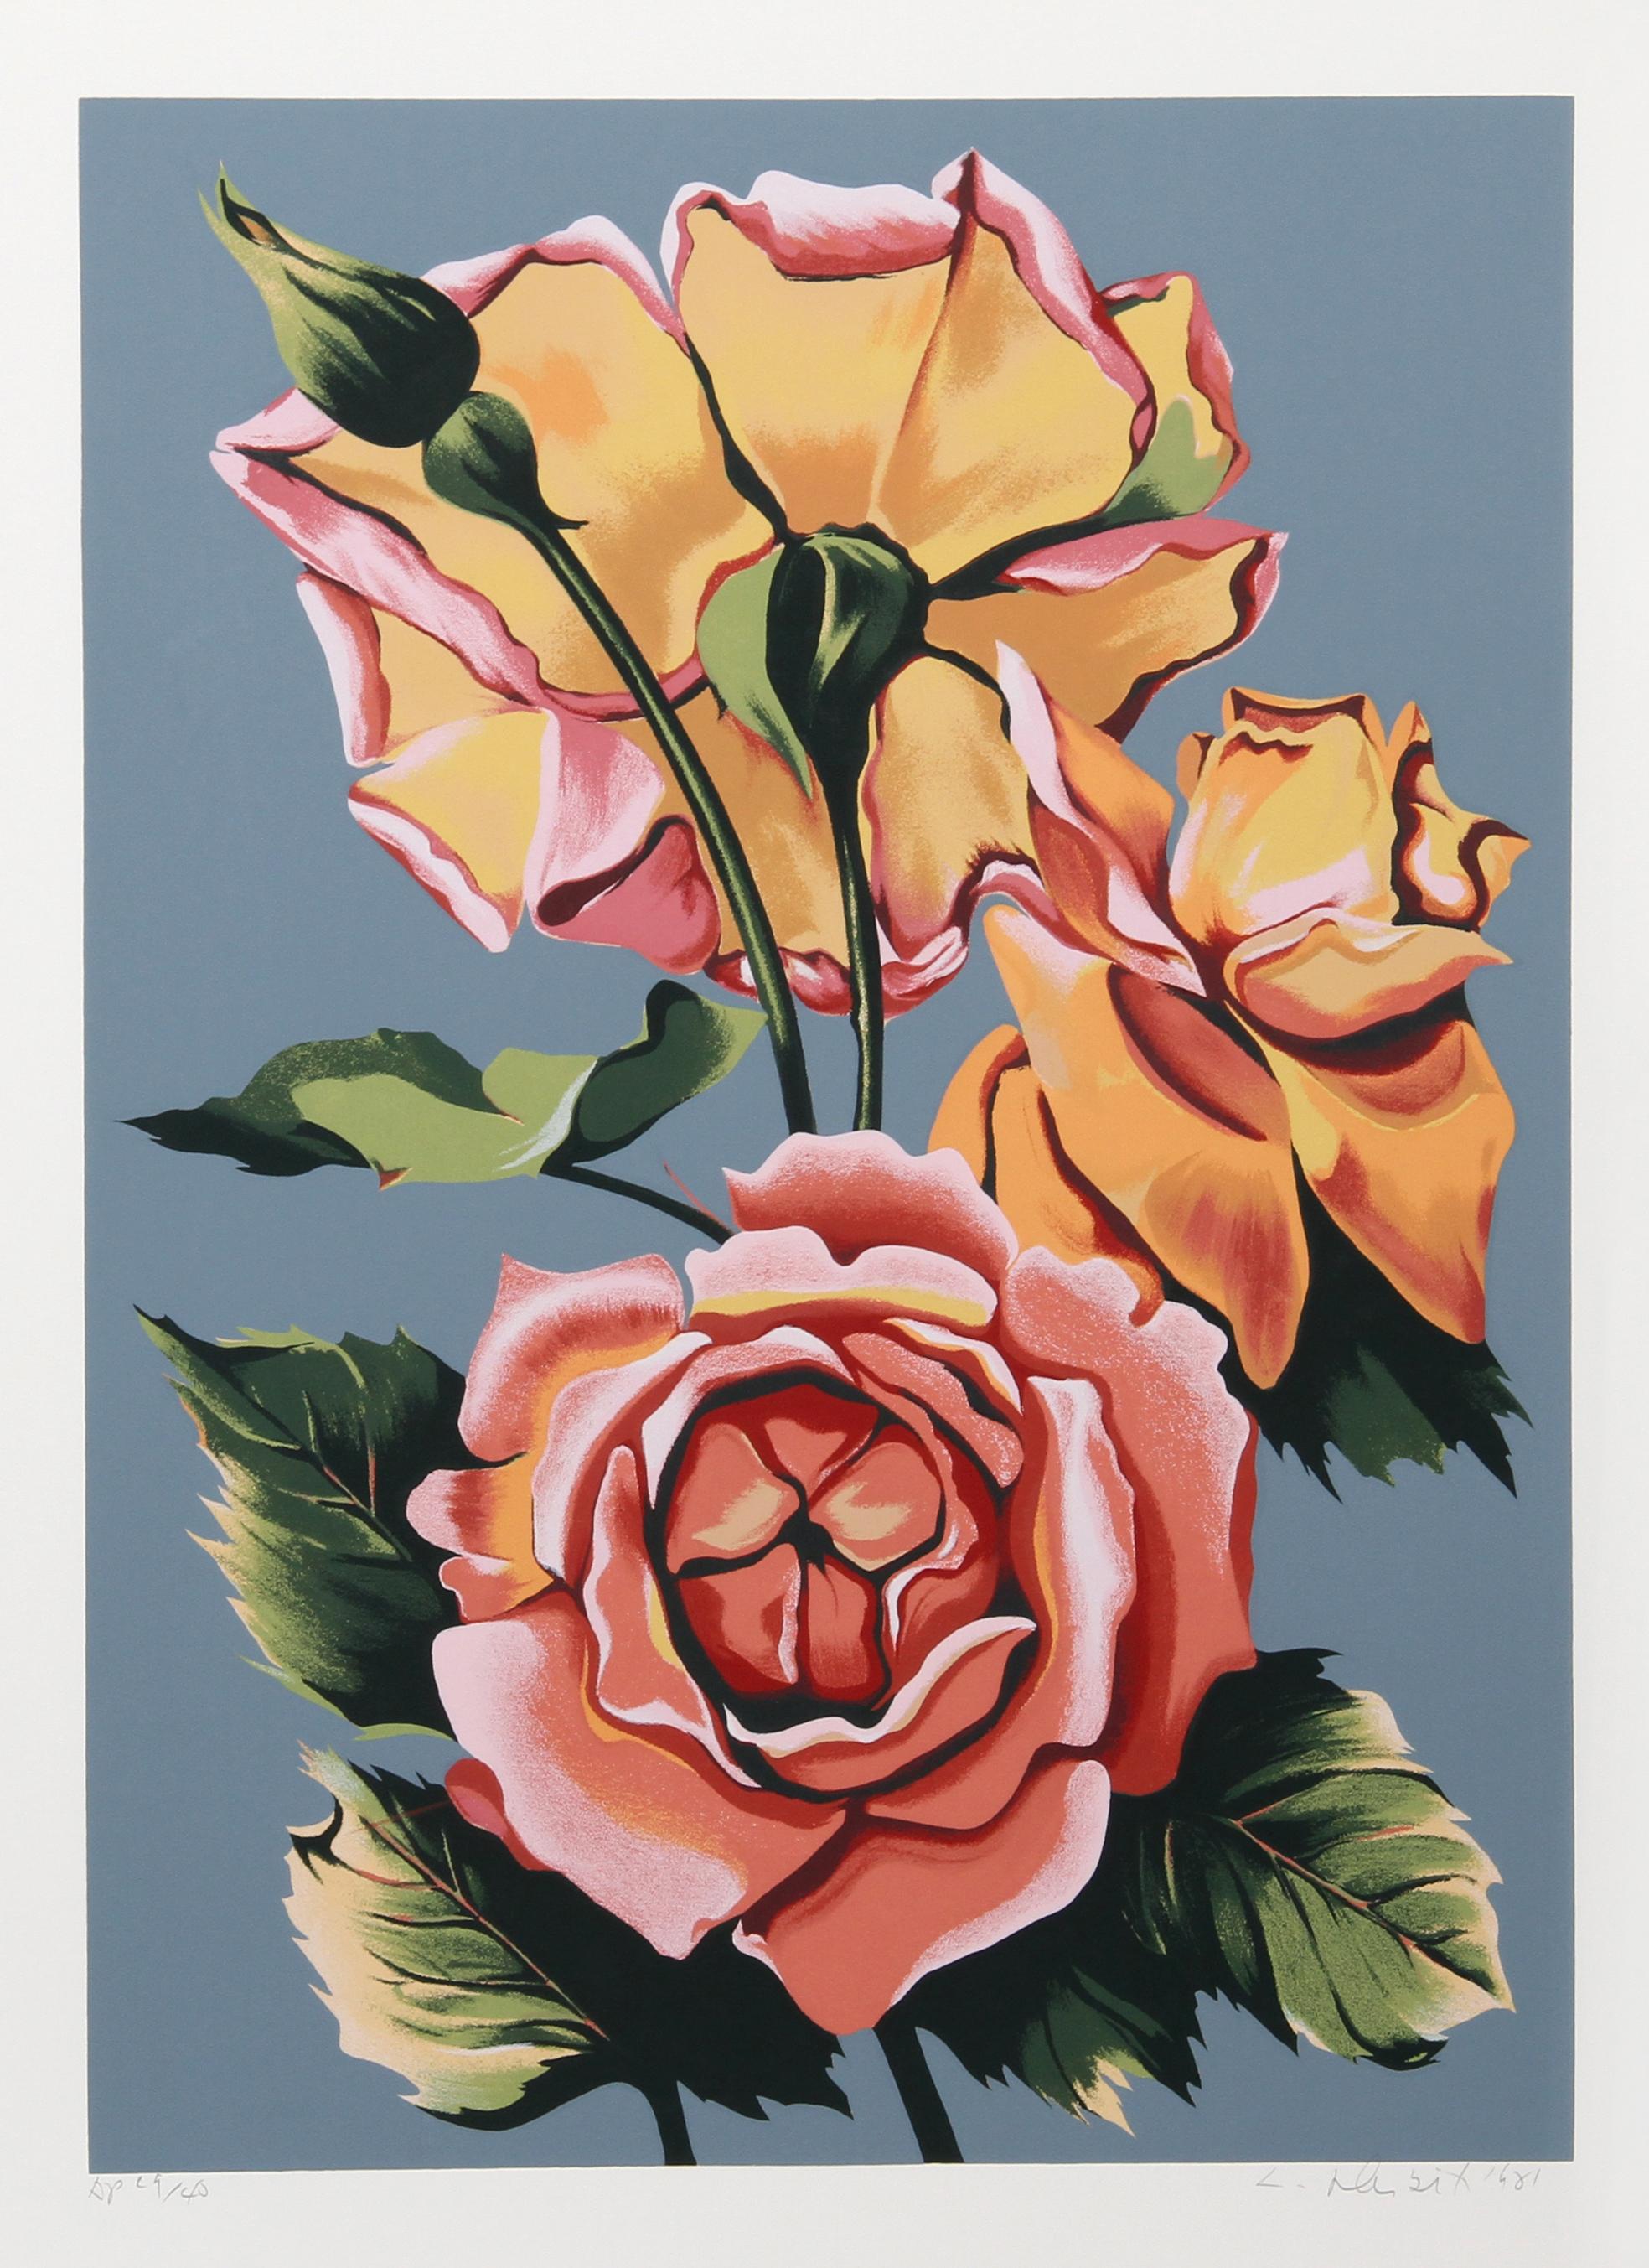 Roses, Photorealist Screenprint by Lowell Nesbitt